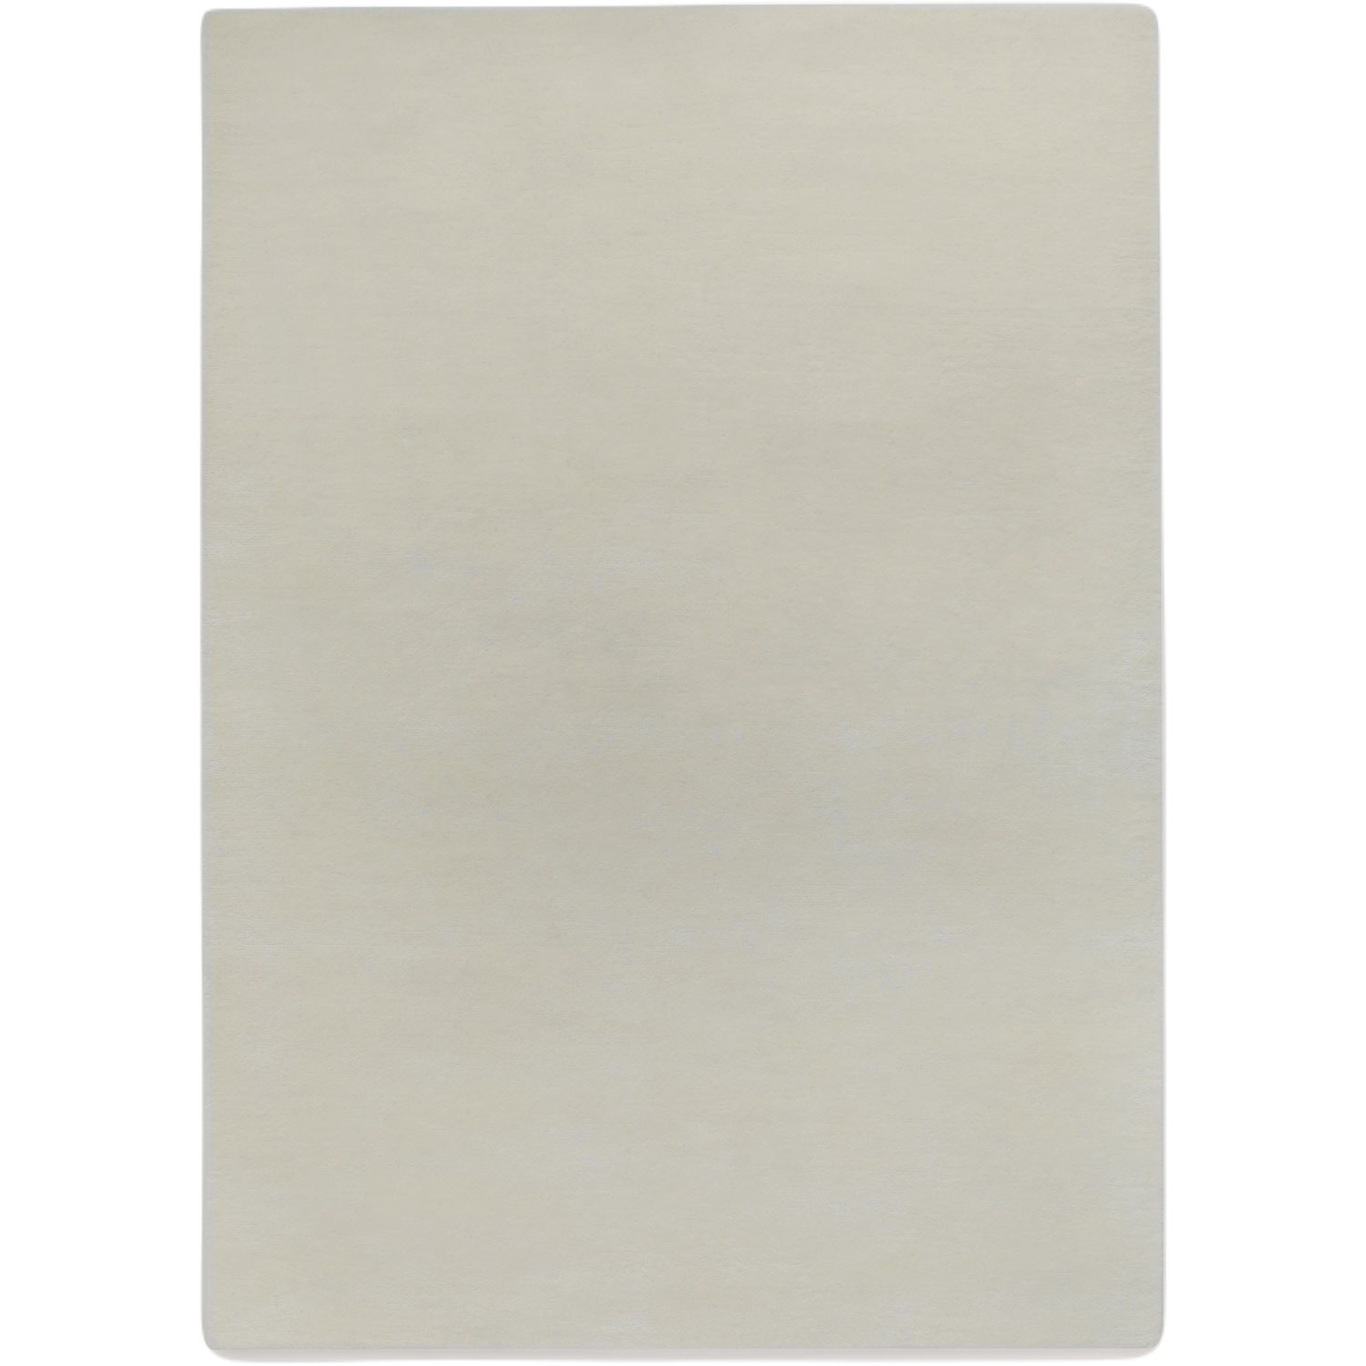 Liljehok Ullteppe Off-white, 170x240 cm